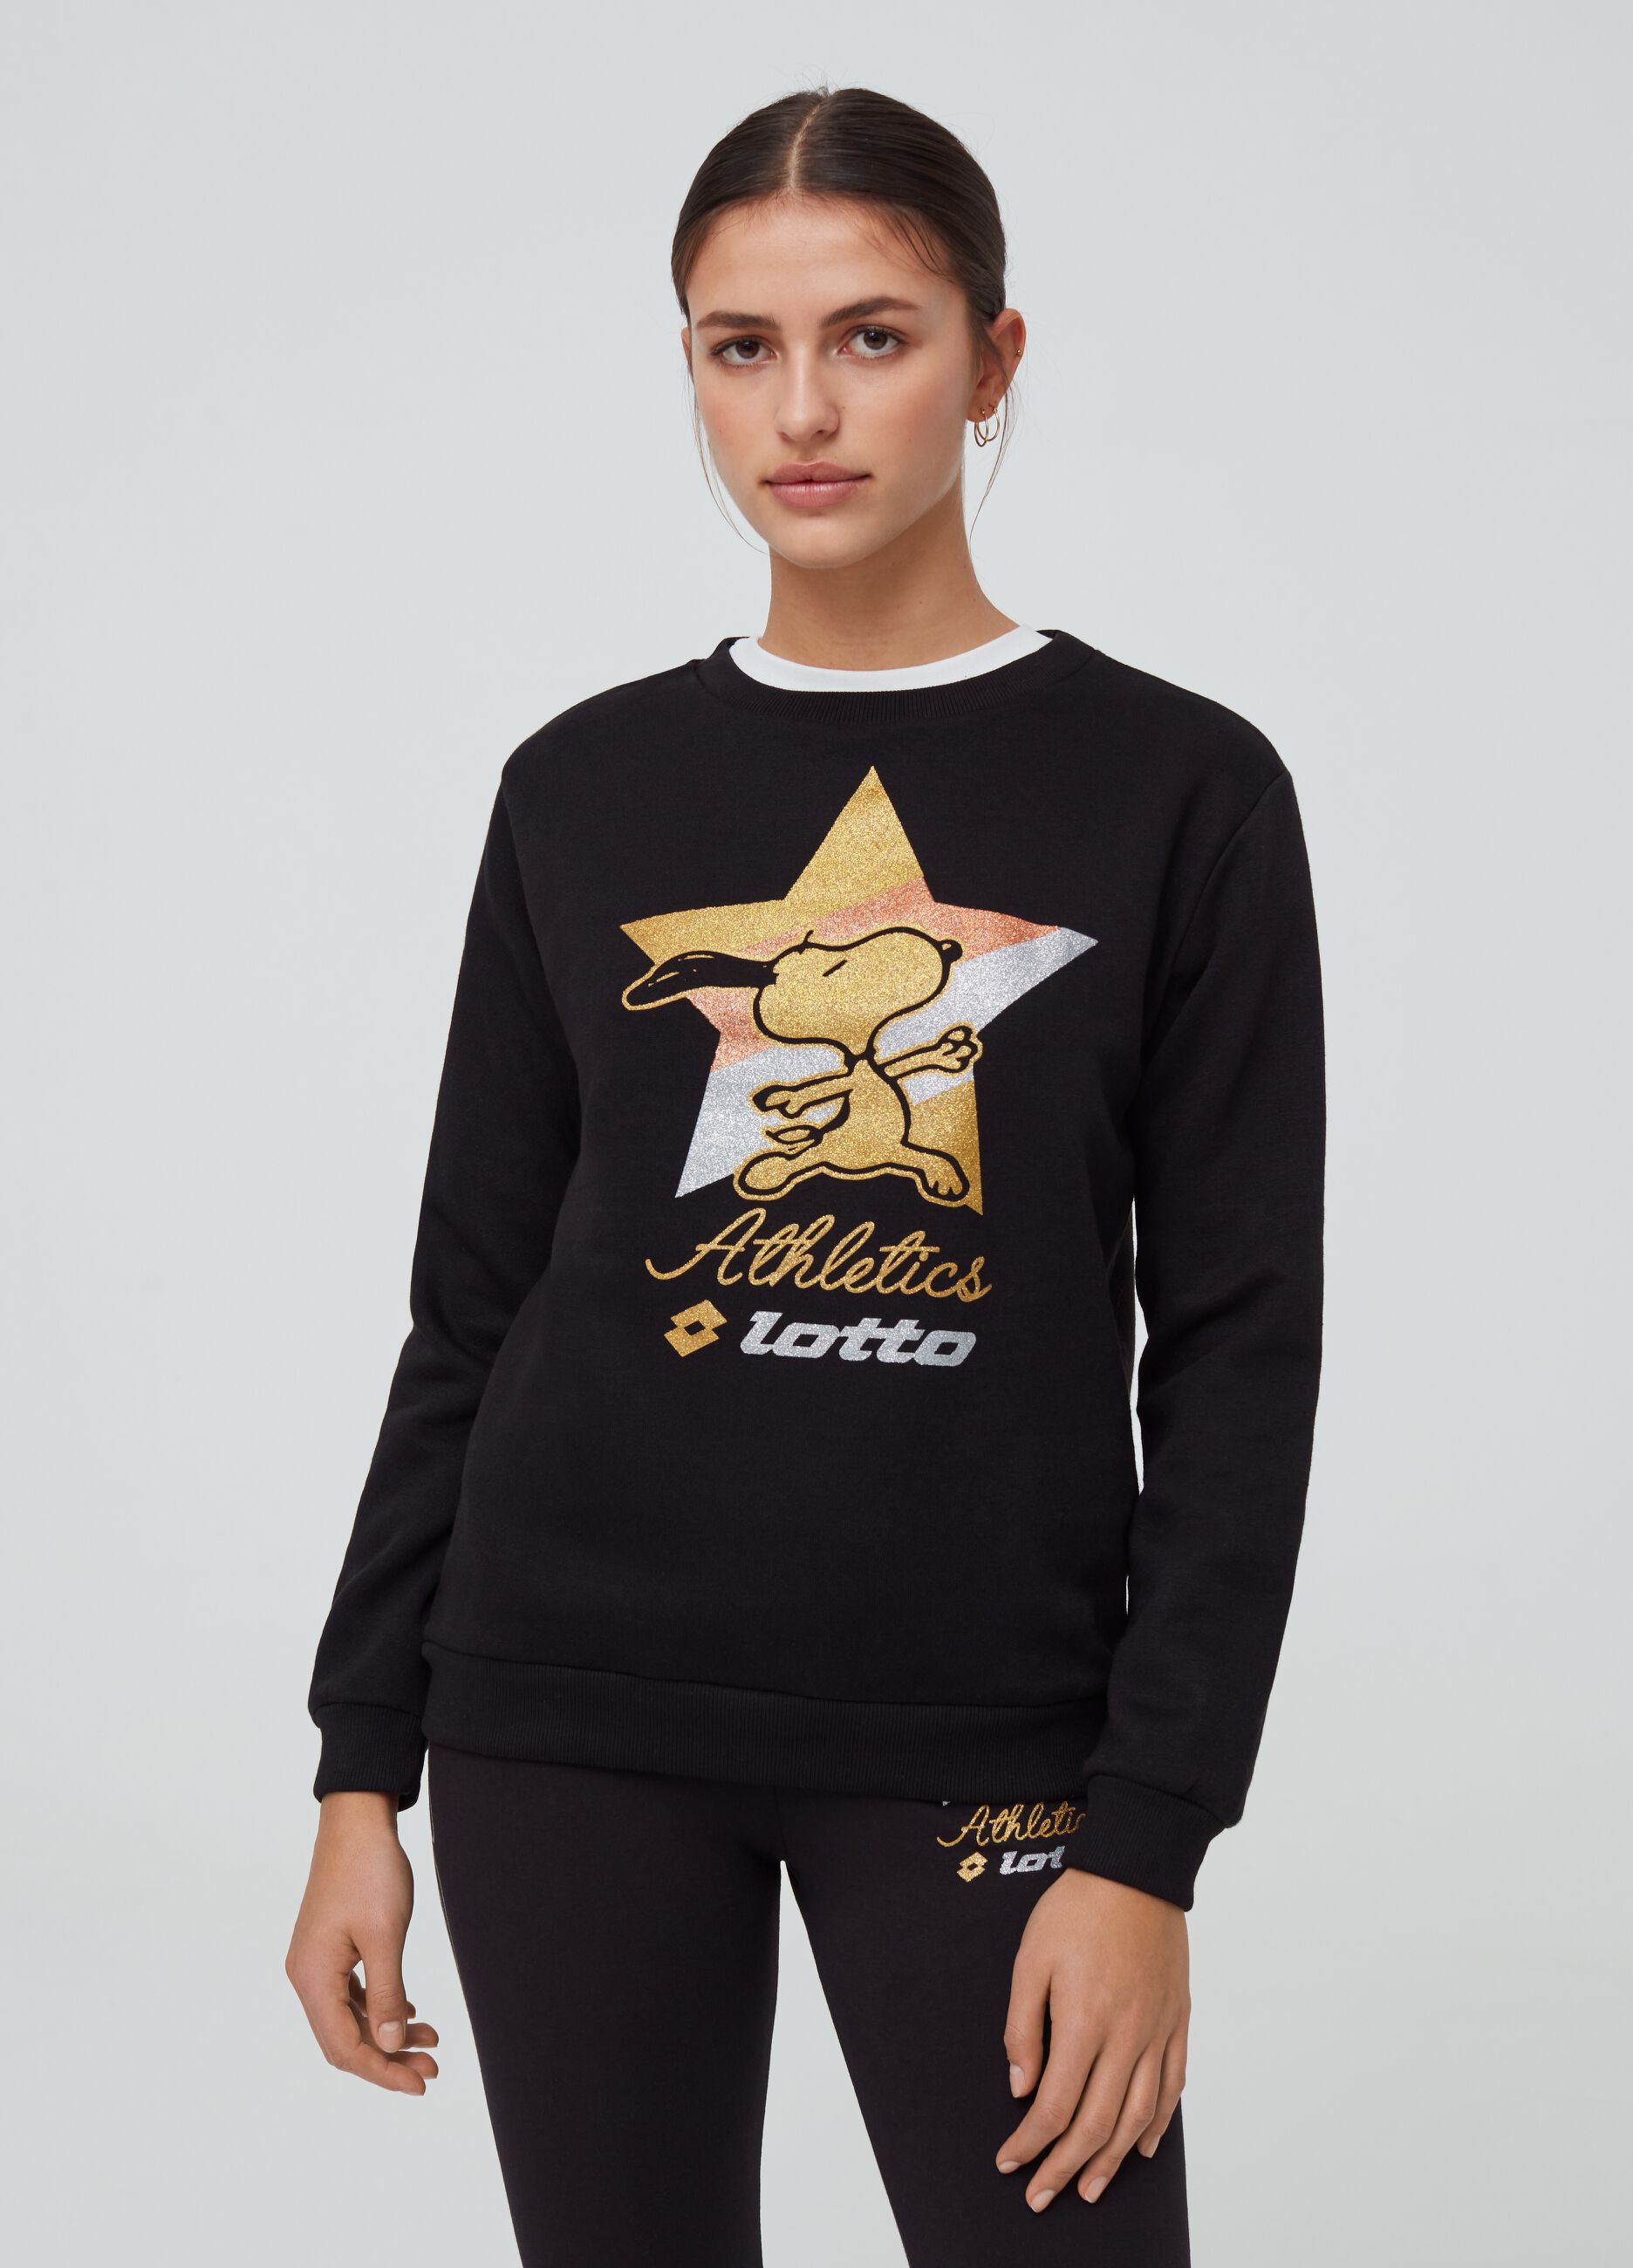 Lotto Peanuts Snoopy sweatshirt with round neck